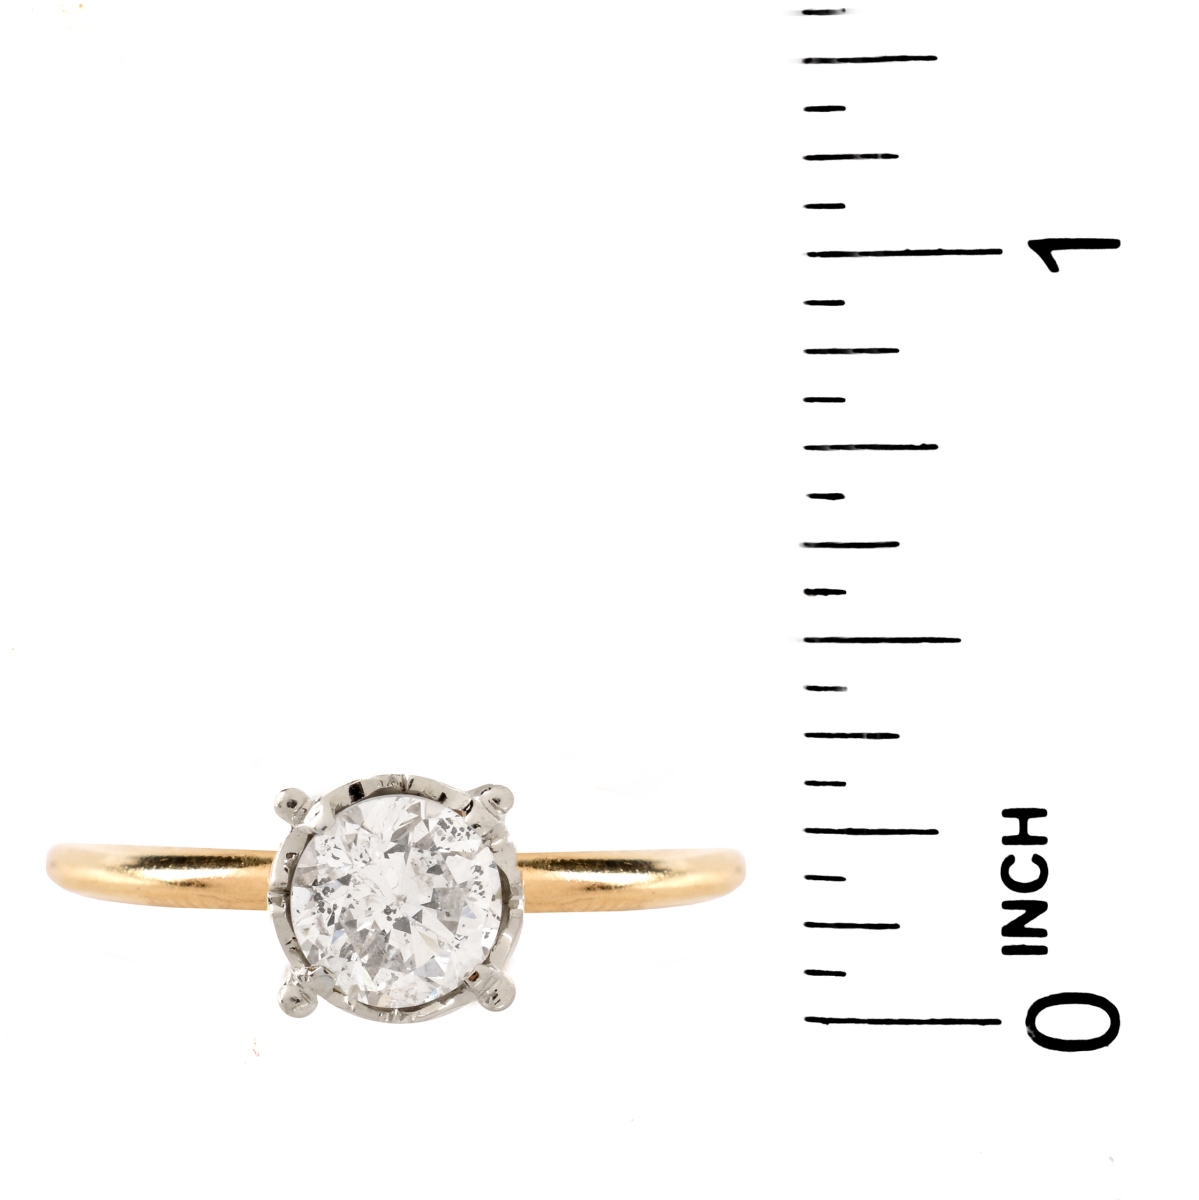 1.0 Carat Diamond and 14K Ring